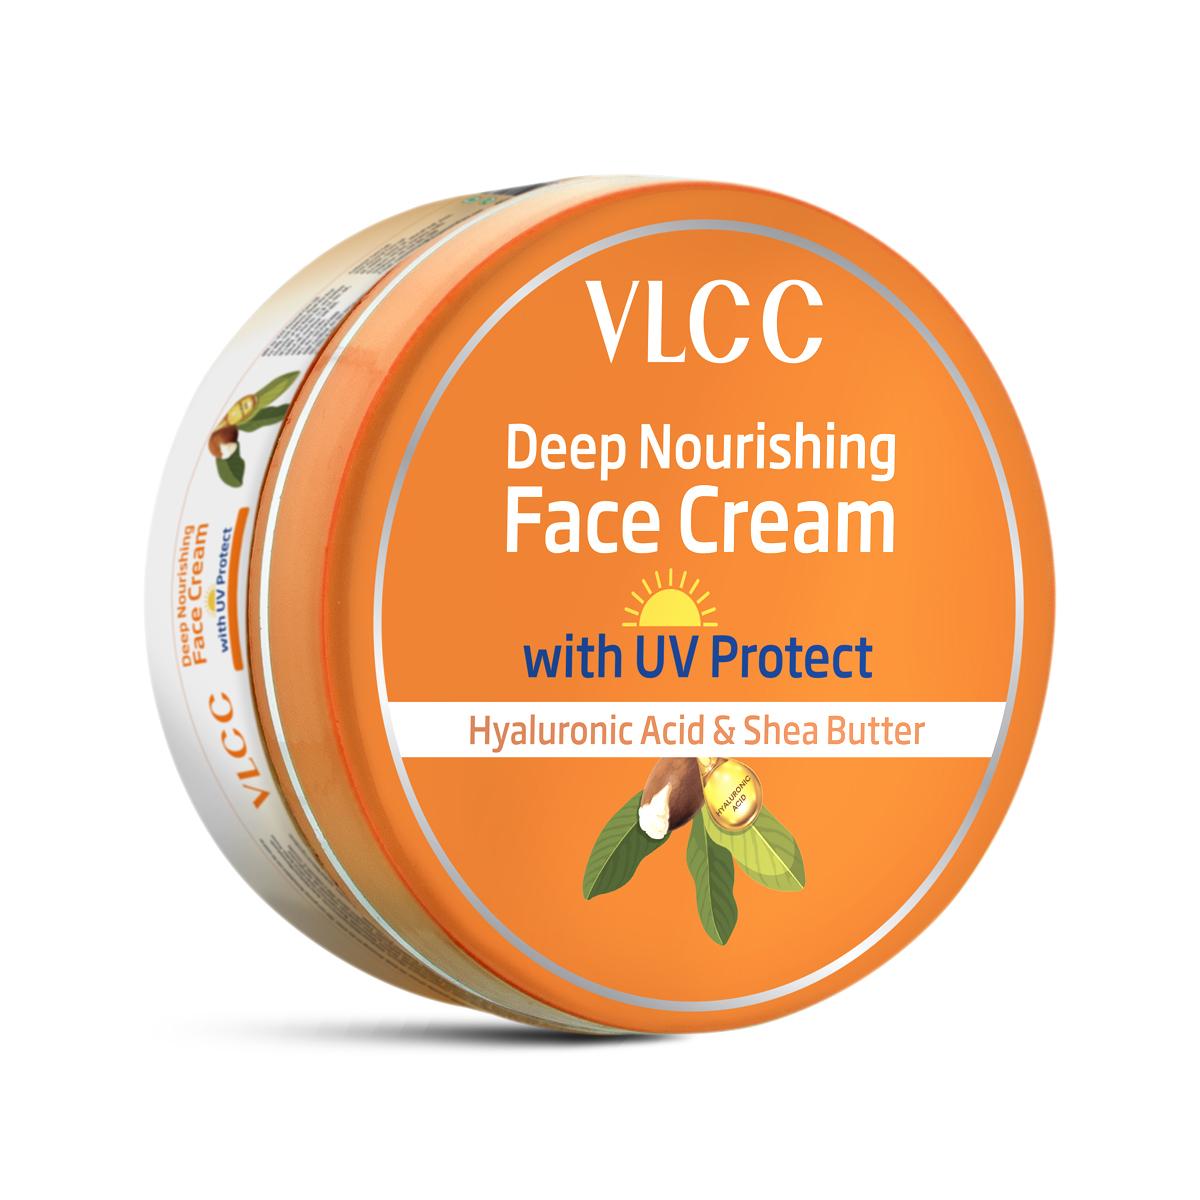 Vlcc Radiant Skin Safeguarded: VLCC Deep Nourishing Face Cream with UV Defense